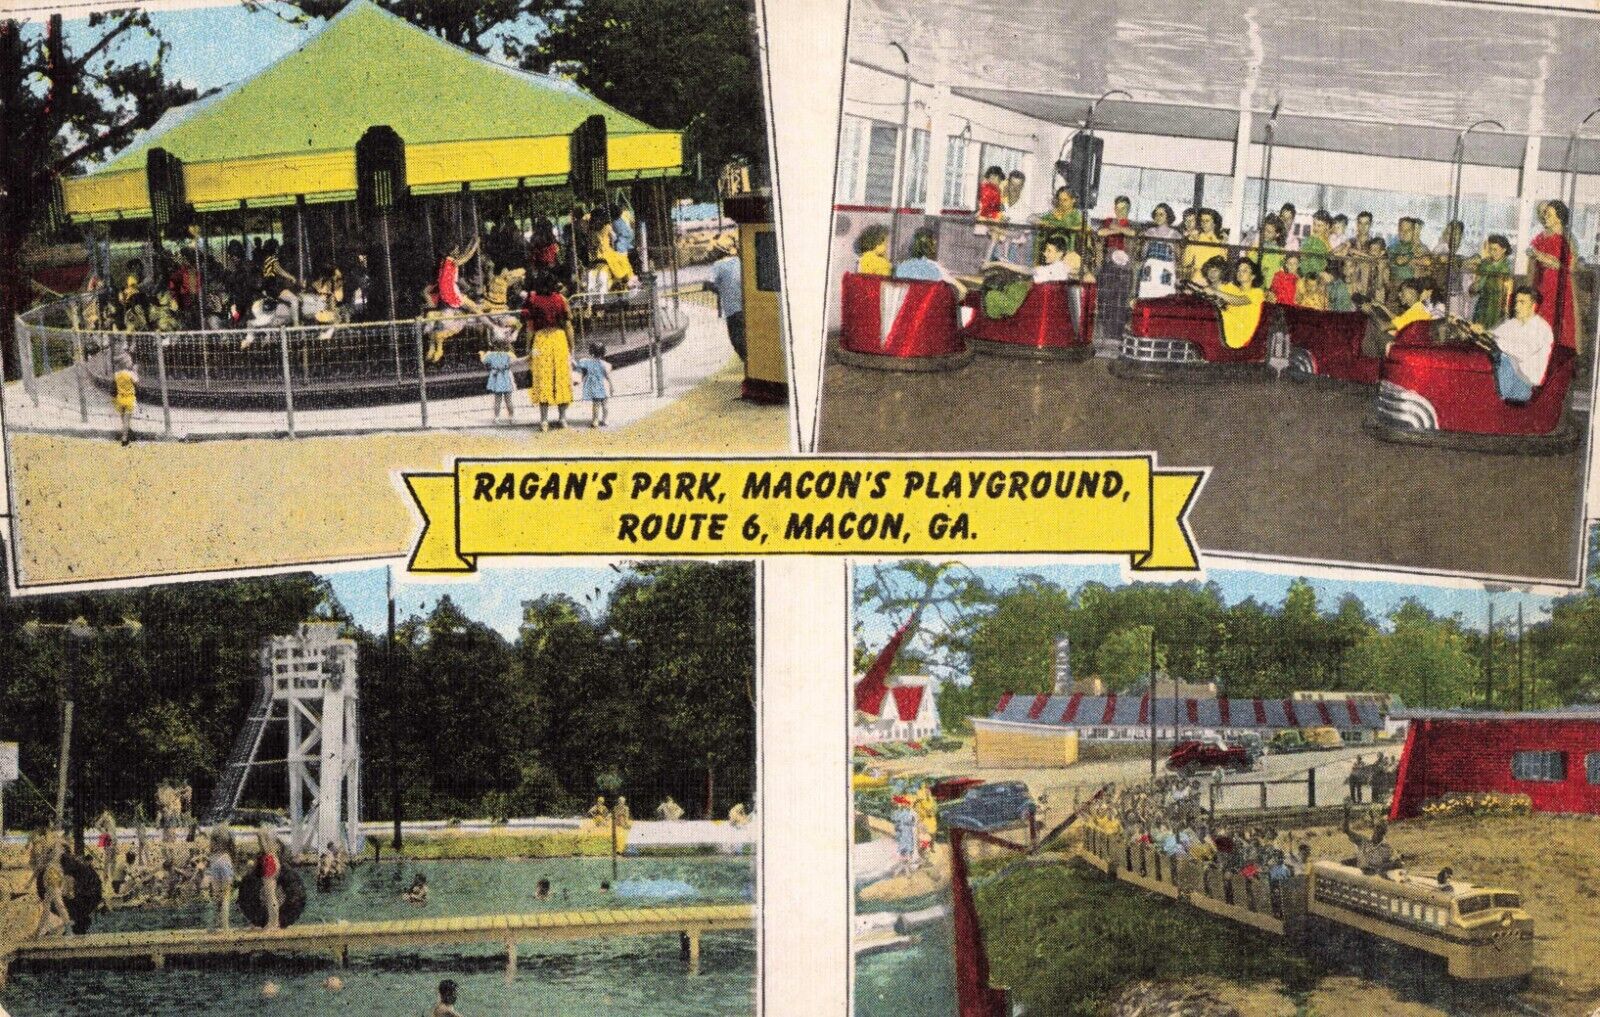 Ragan's Amusement Park Route 6 Macon Georgia Carousel Bumper Cars c1950 Postcard